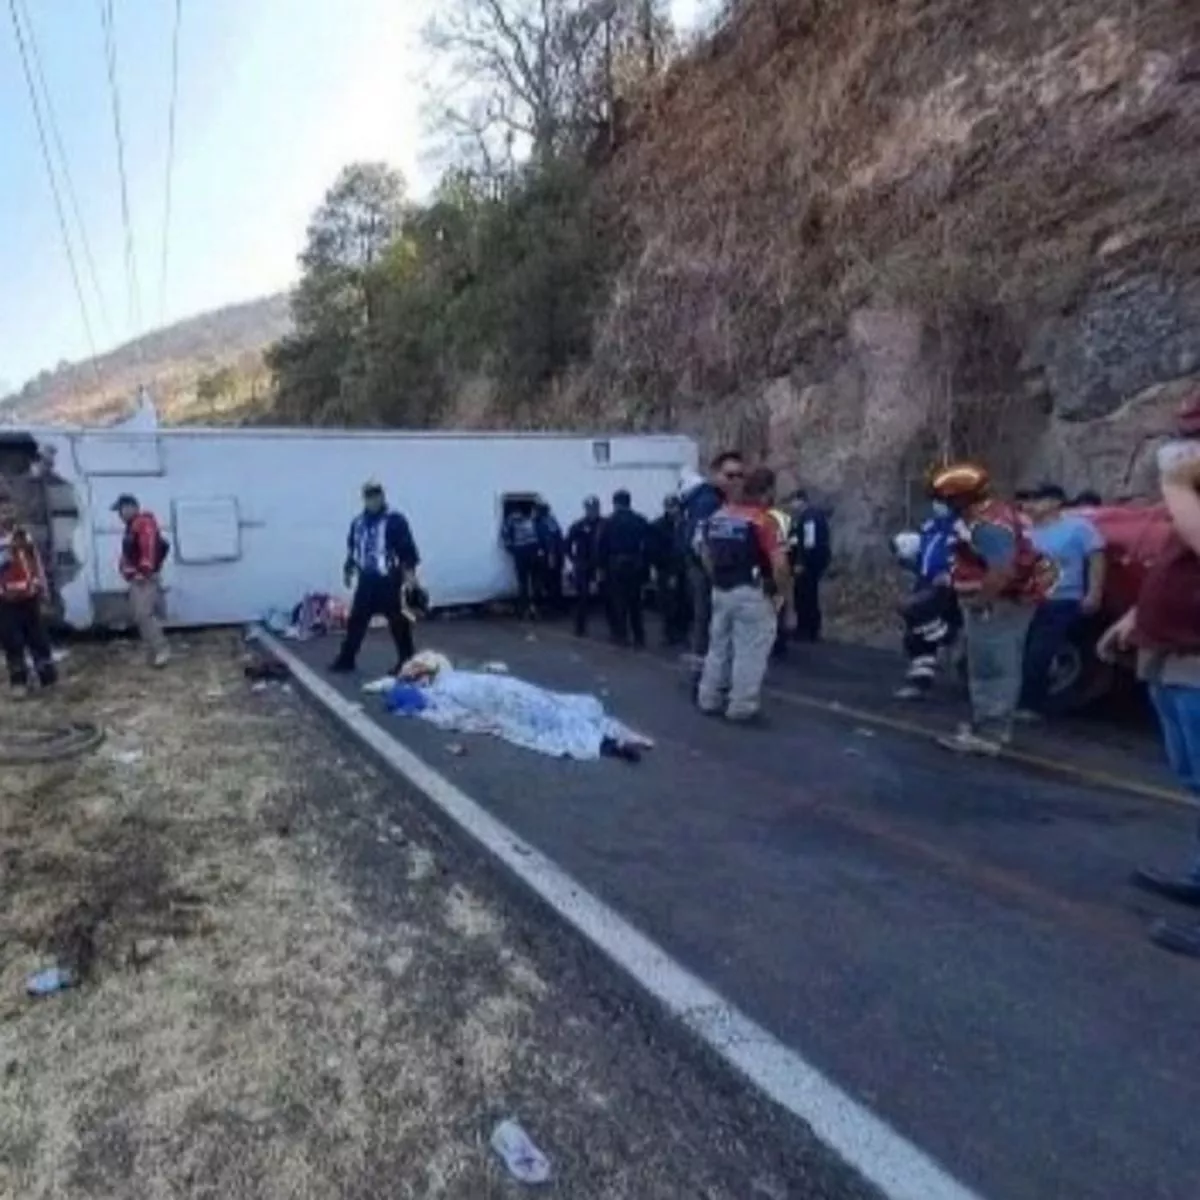 Speeding, poor roads blamed in fatal Peru bus crash